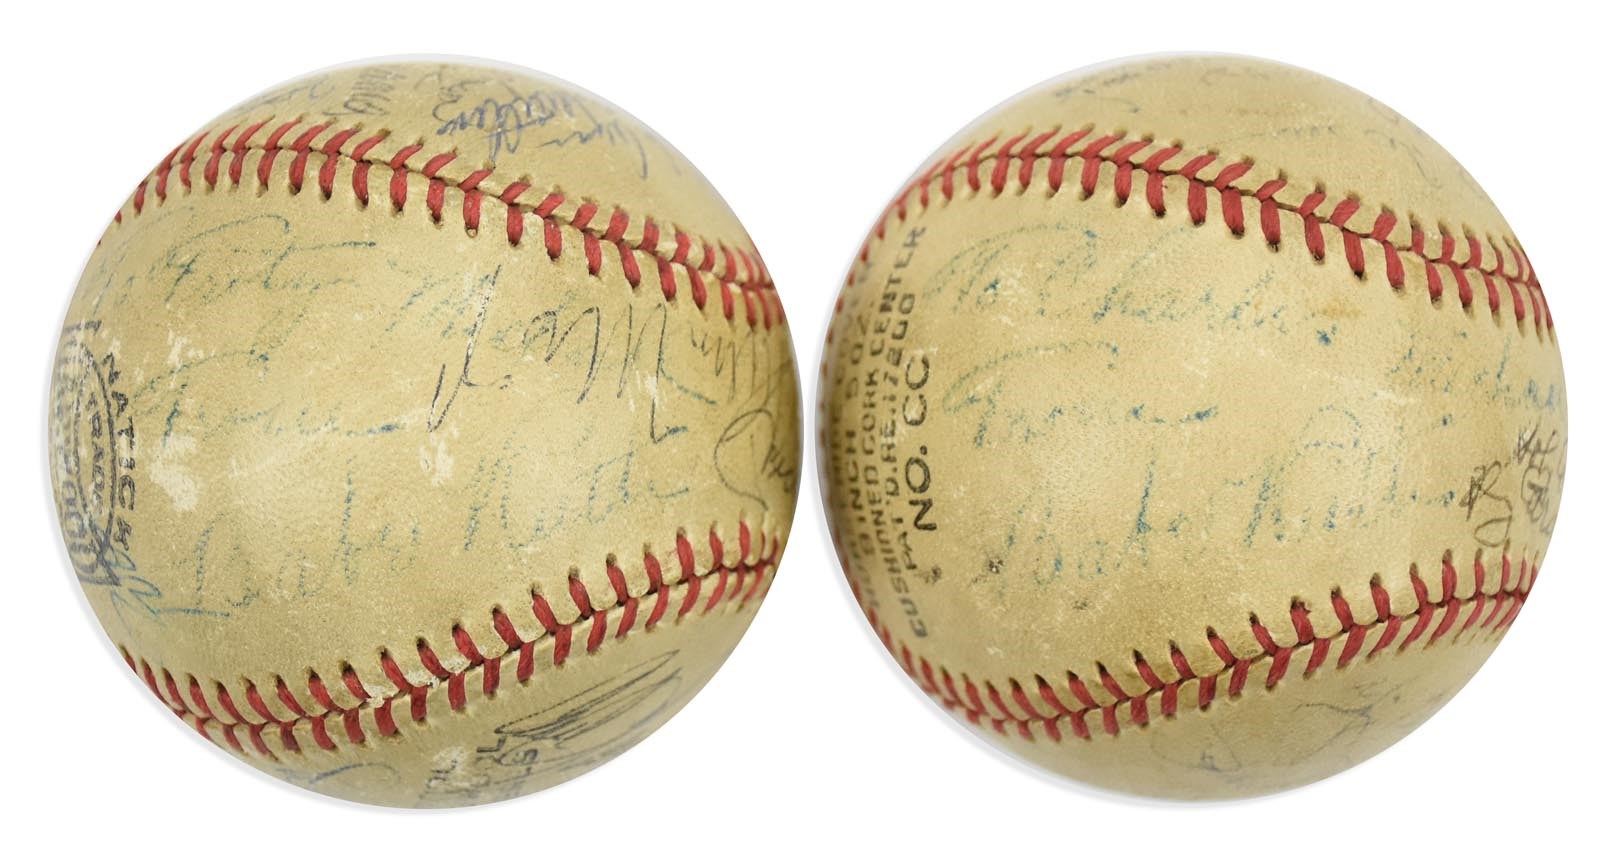 Baseball Autographs - Pair of Fantastic Babe Ruth & HOFers Signed Baseballs from the Same Family (PSA)